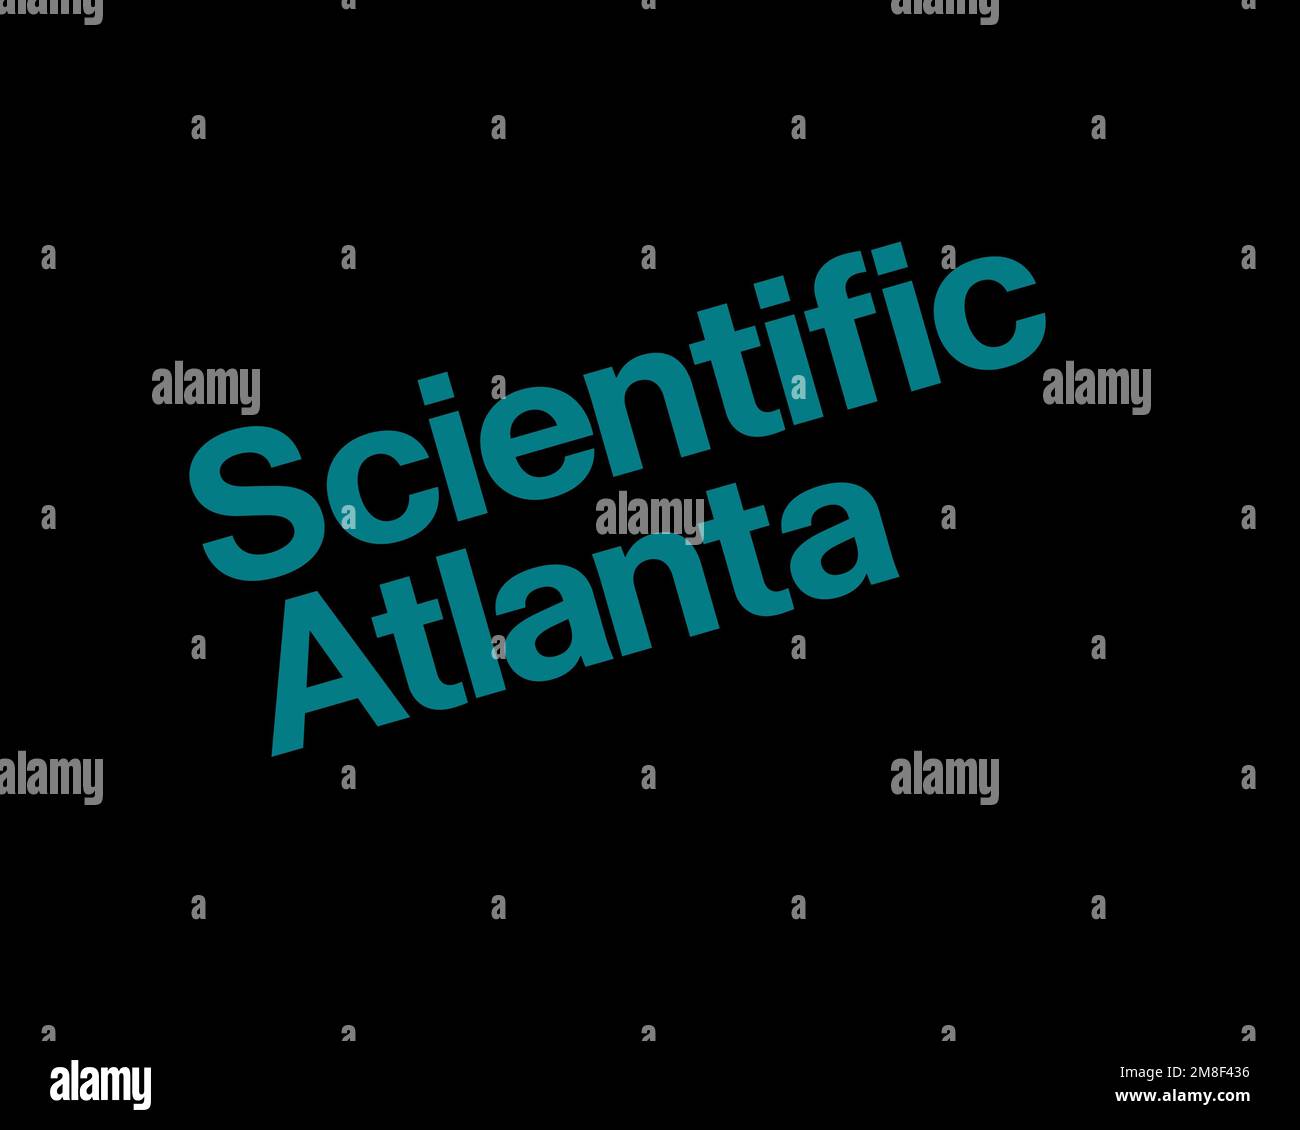 Scientific Atlanta, rotated logo, black background Stock Photo